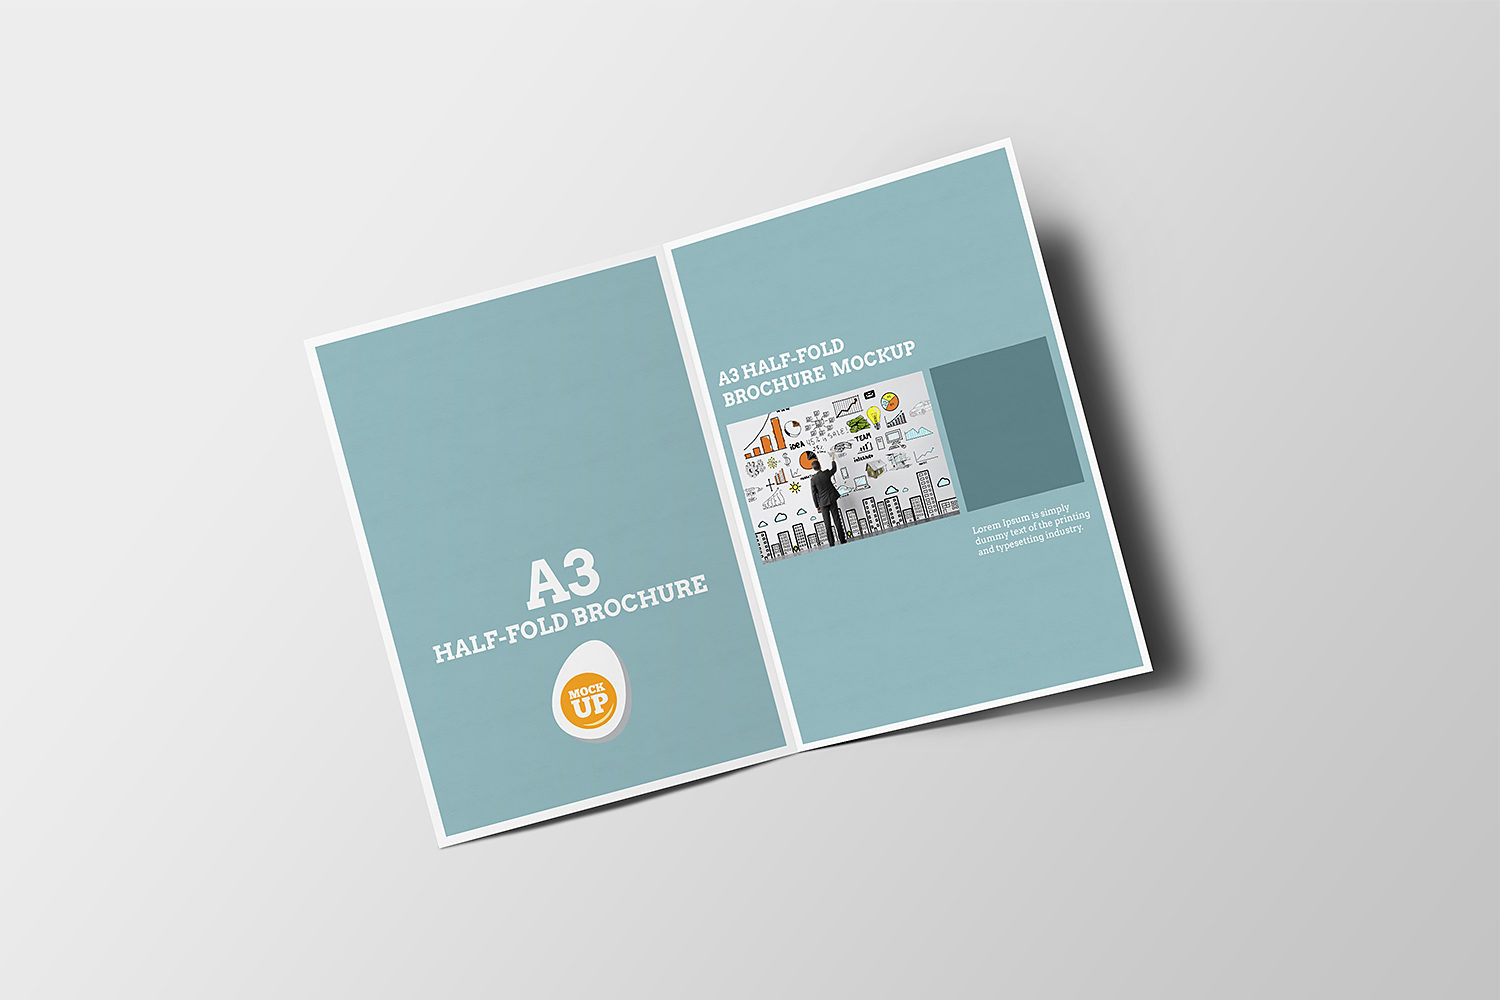 A3 Half-fold Brochure Mockup Free